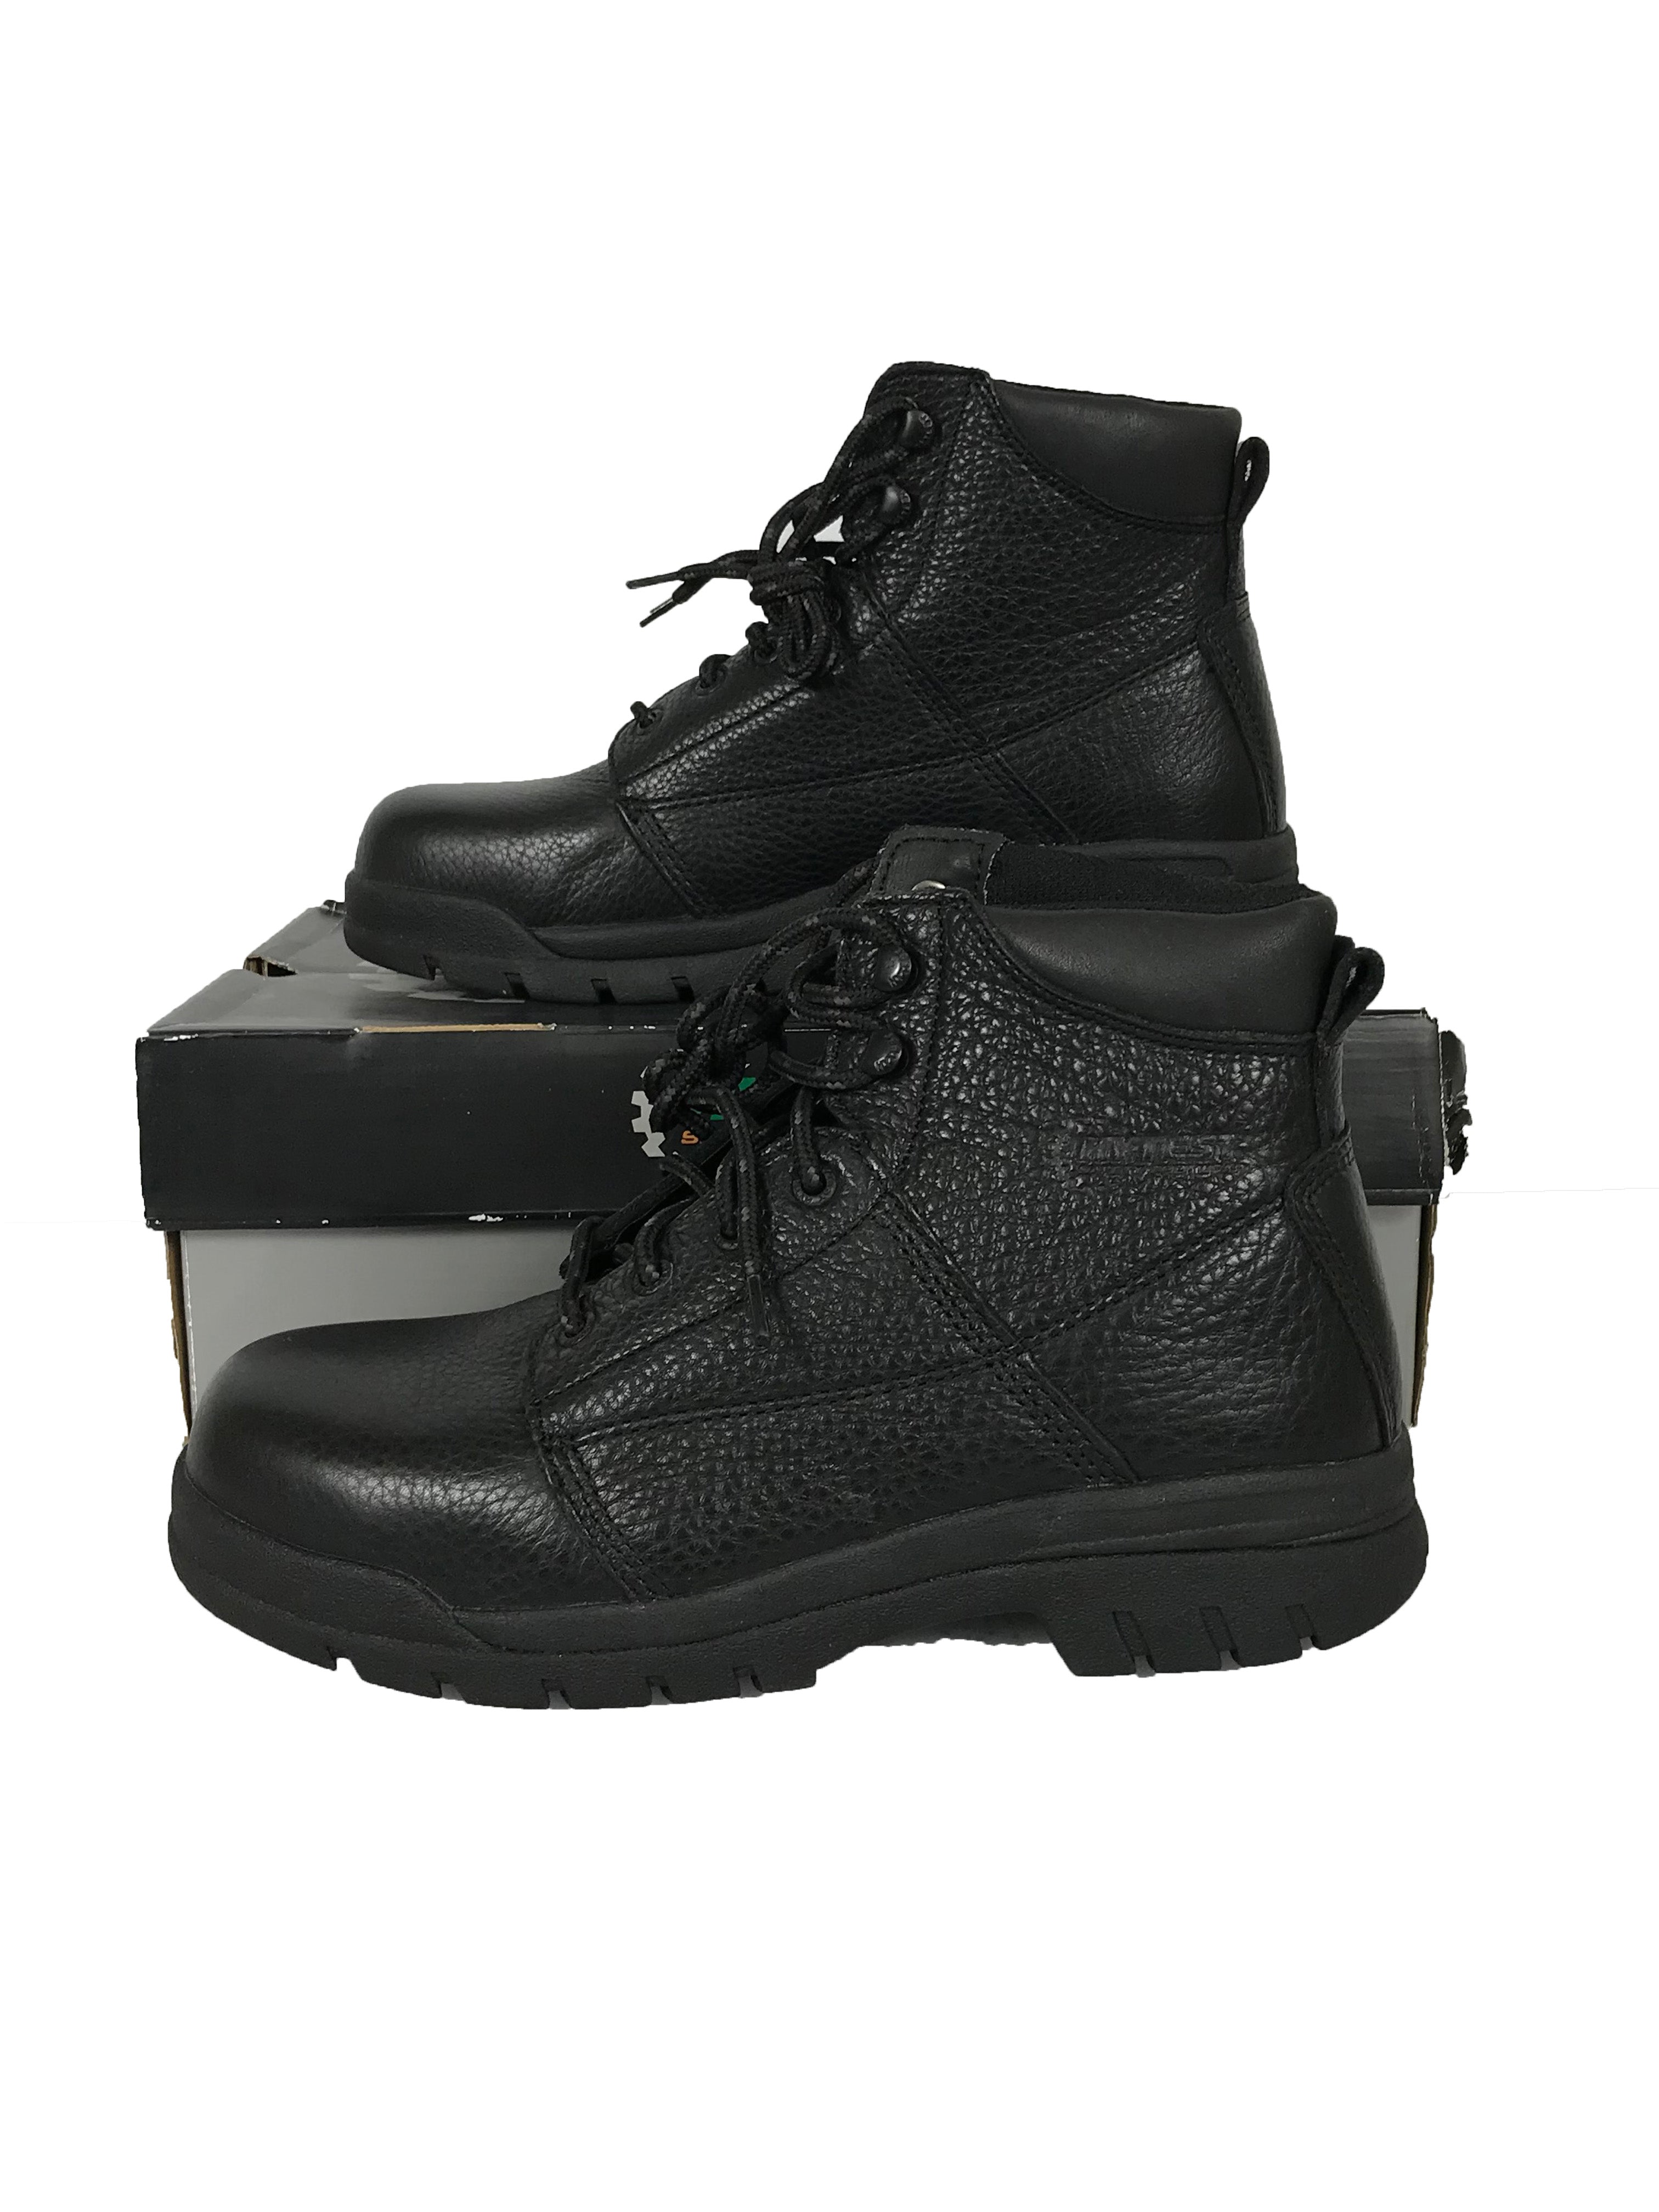 Hytest Black Steel Toe Boots Men's Size 8